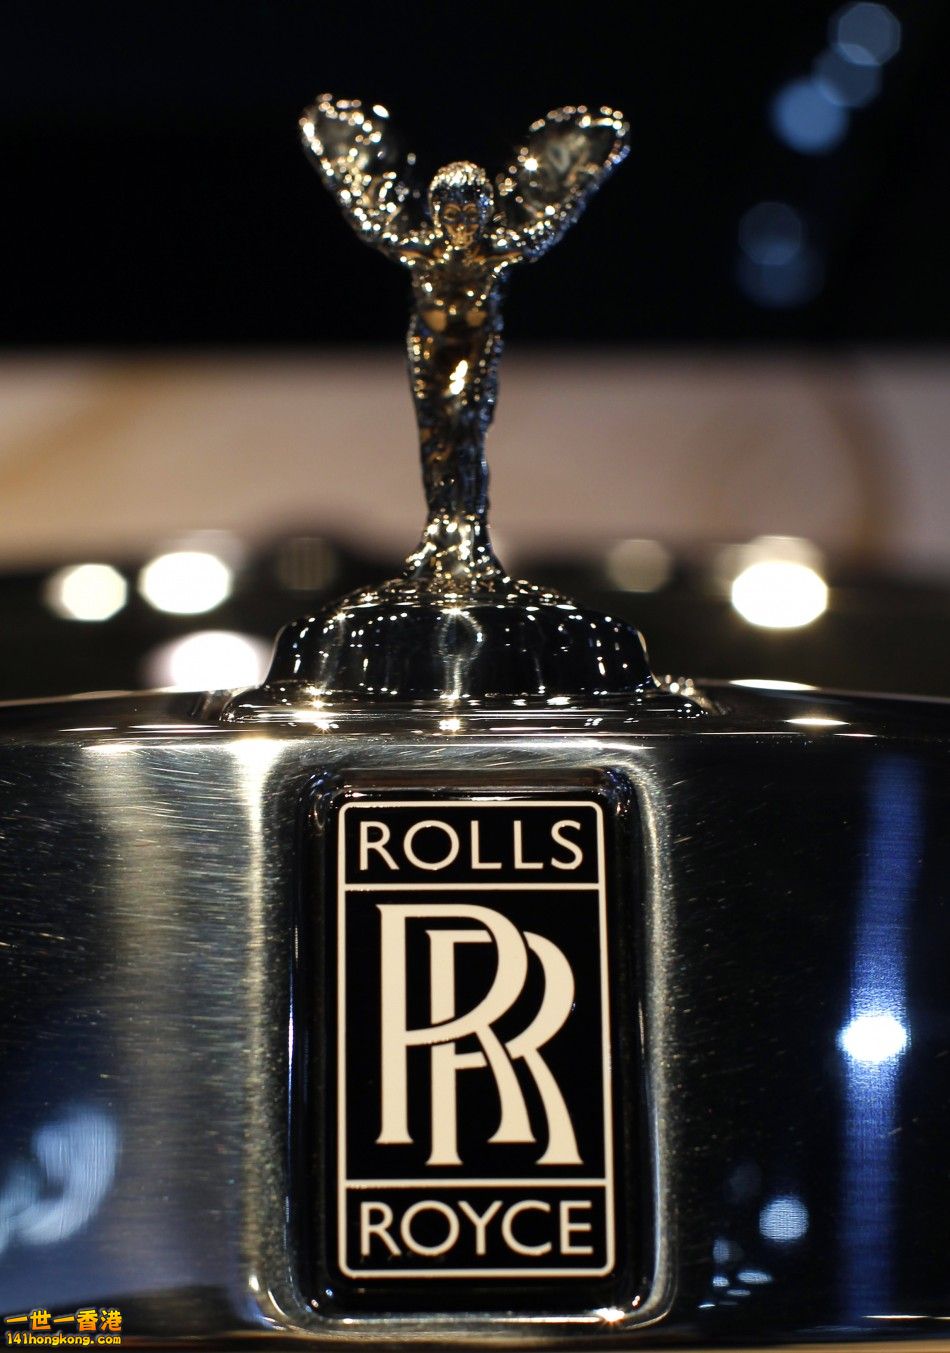 91524-rolls-royce-logo-and-radiator cap is seen on a rolls royce phantomat picture.jpg